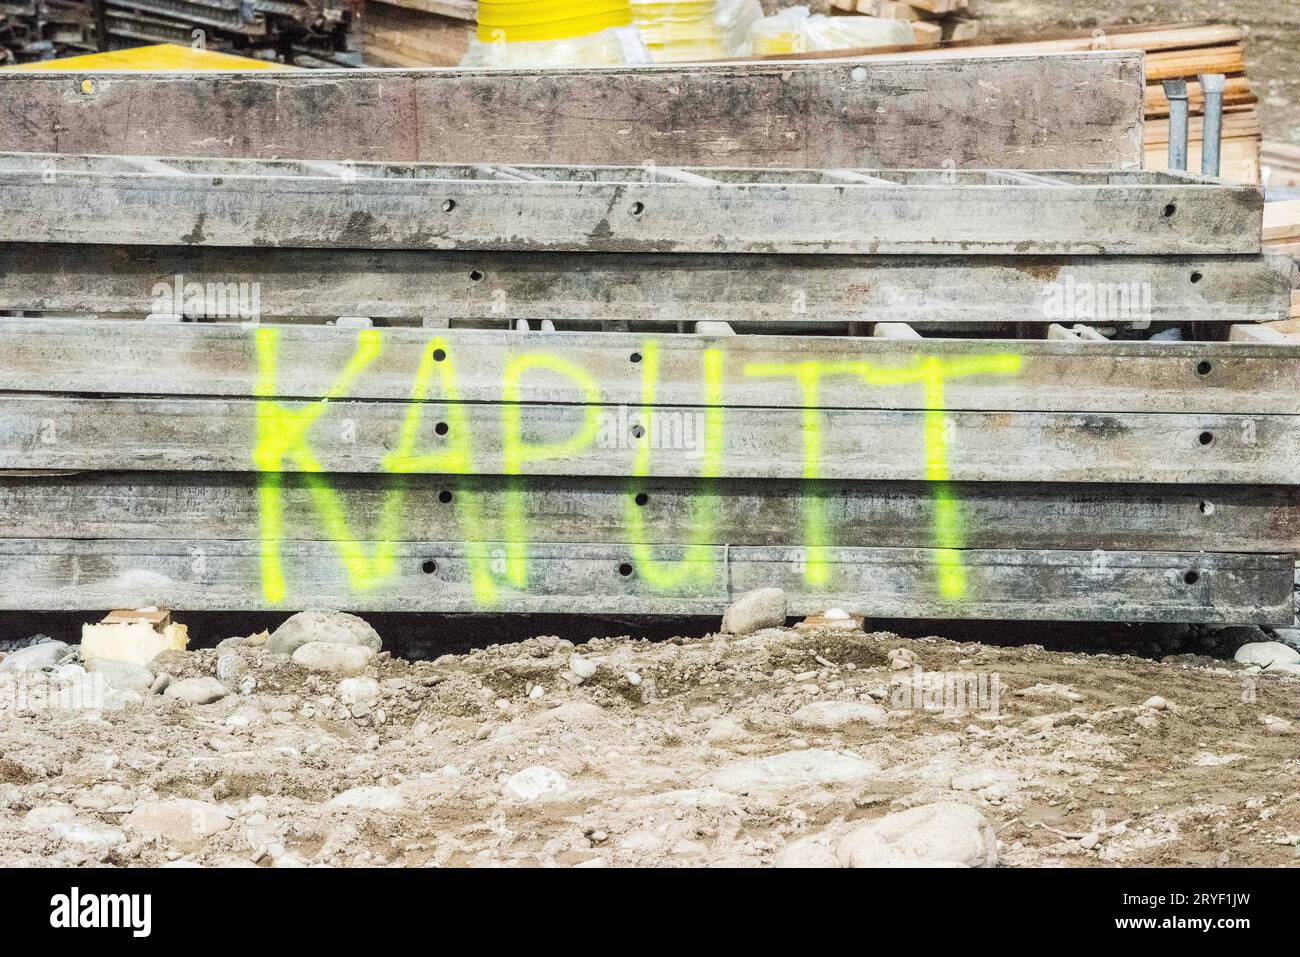 The word 'kaputt' (broken) sprayed at construction site Stock Photo